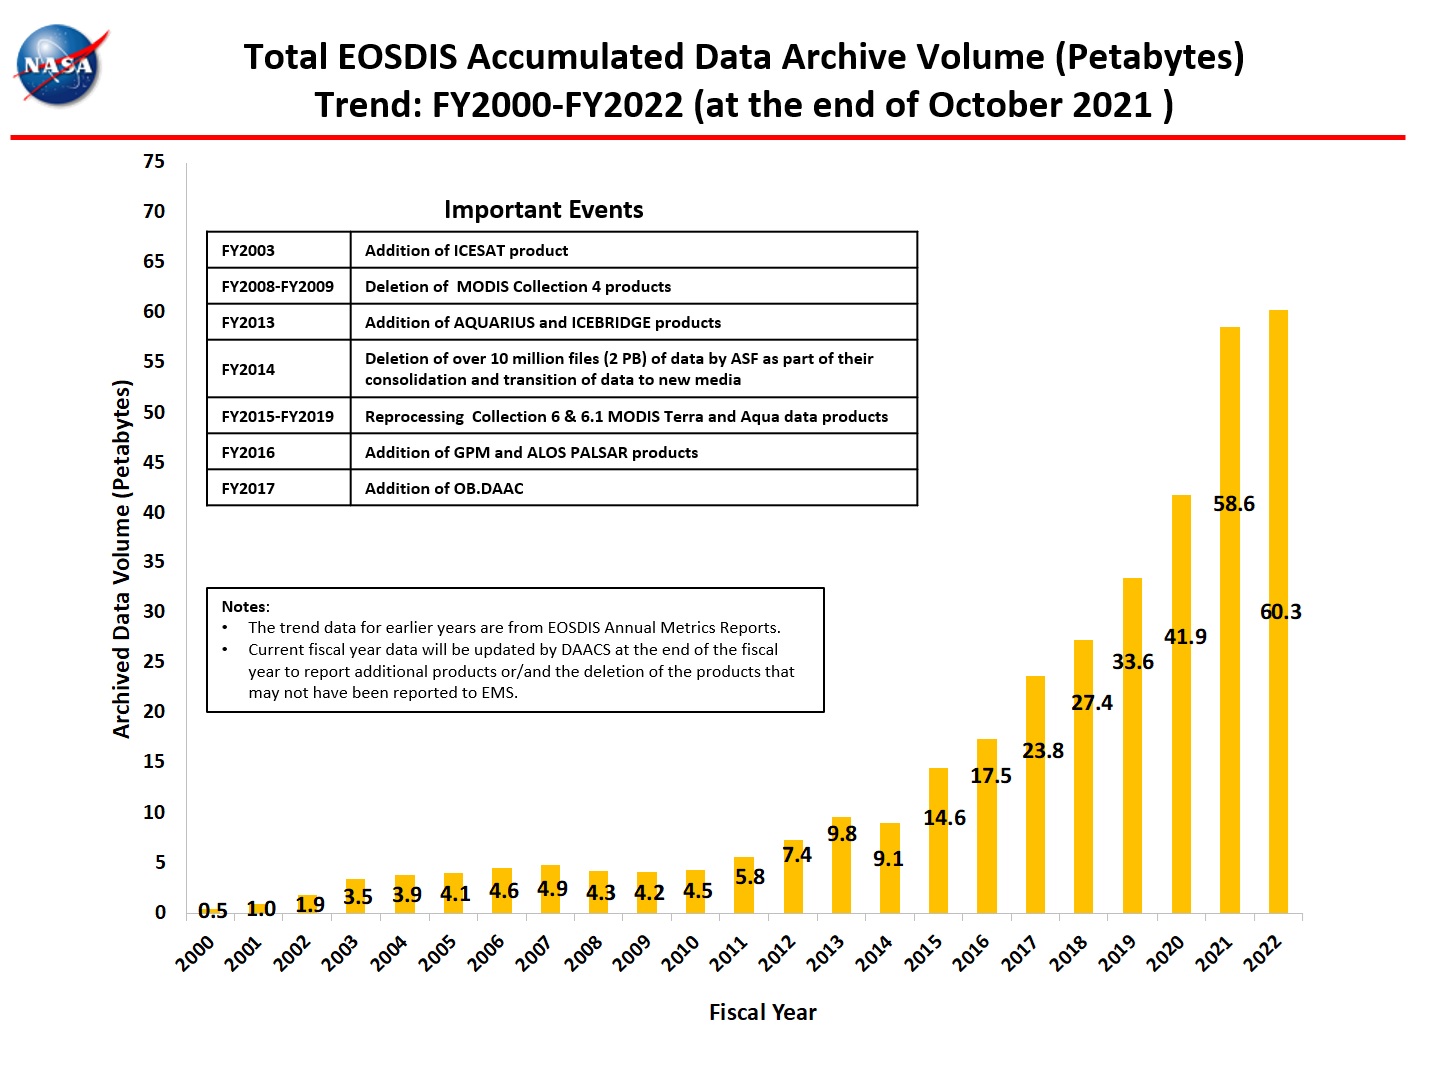 Total EOSDIS Accumulated Data Archive Volume in Petabytes